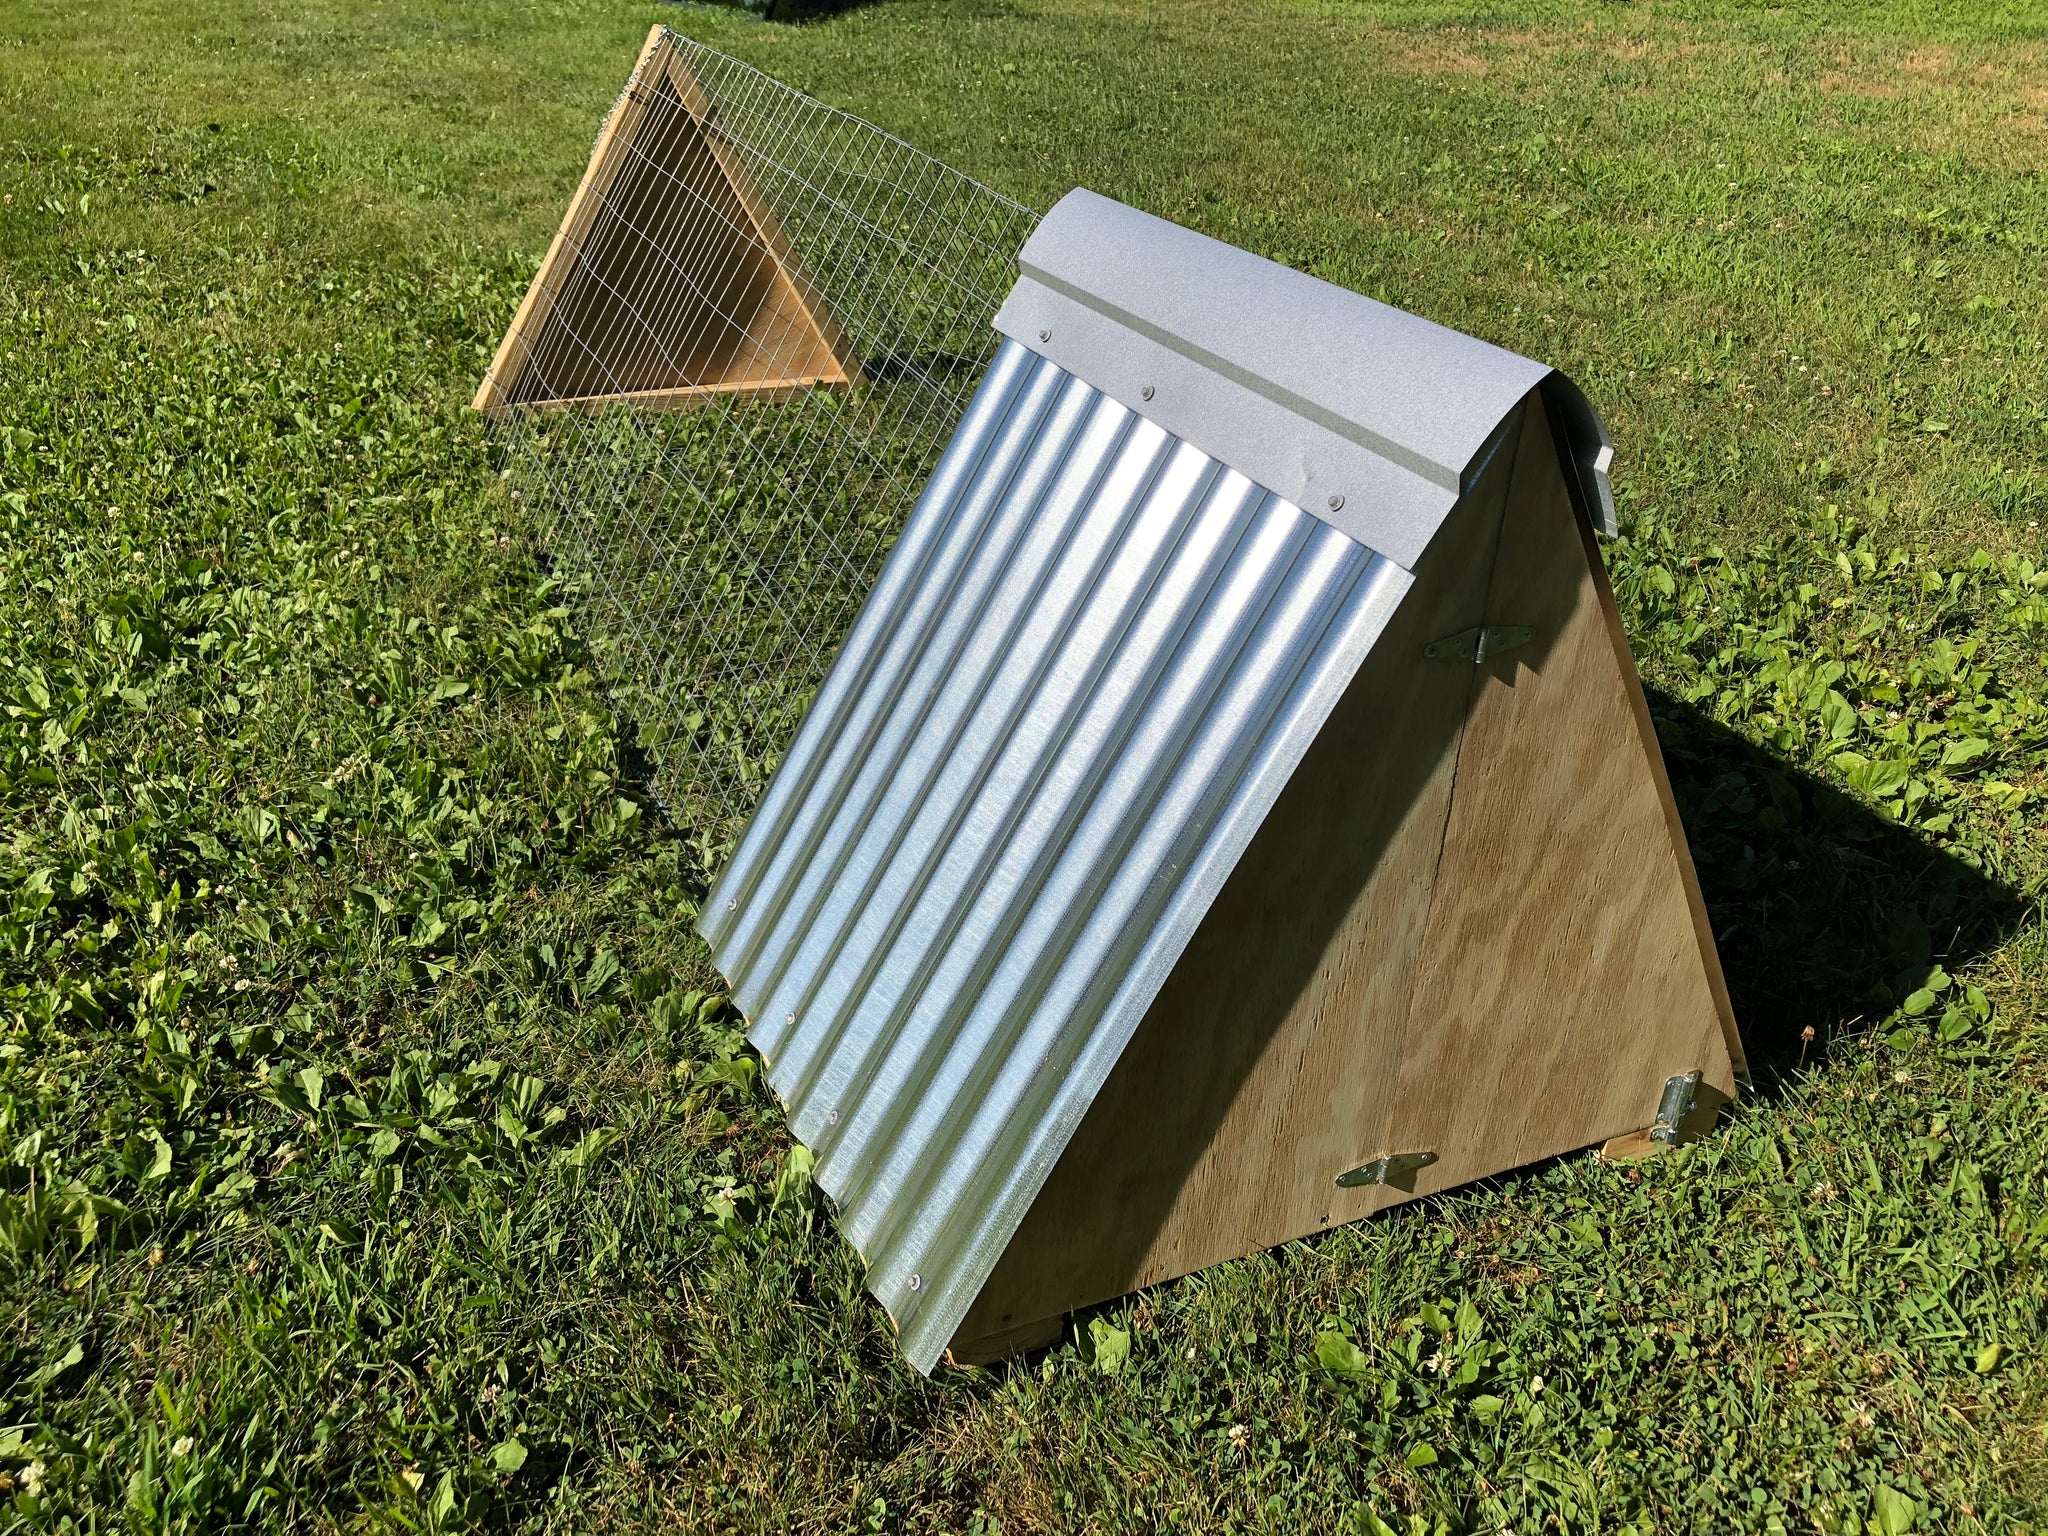 Pasture Tractor - Rabbit & Chicken 3 season portable shelter